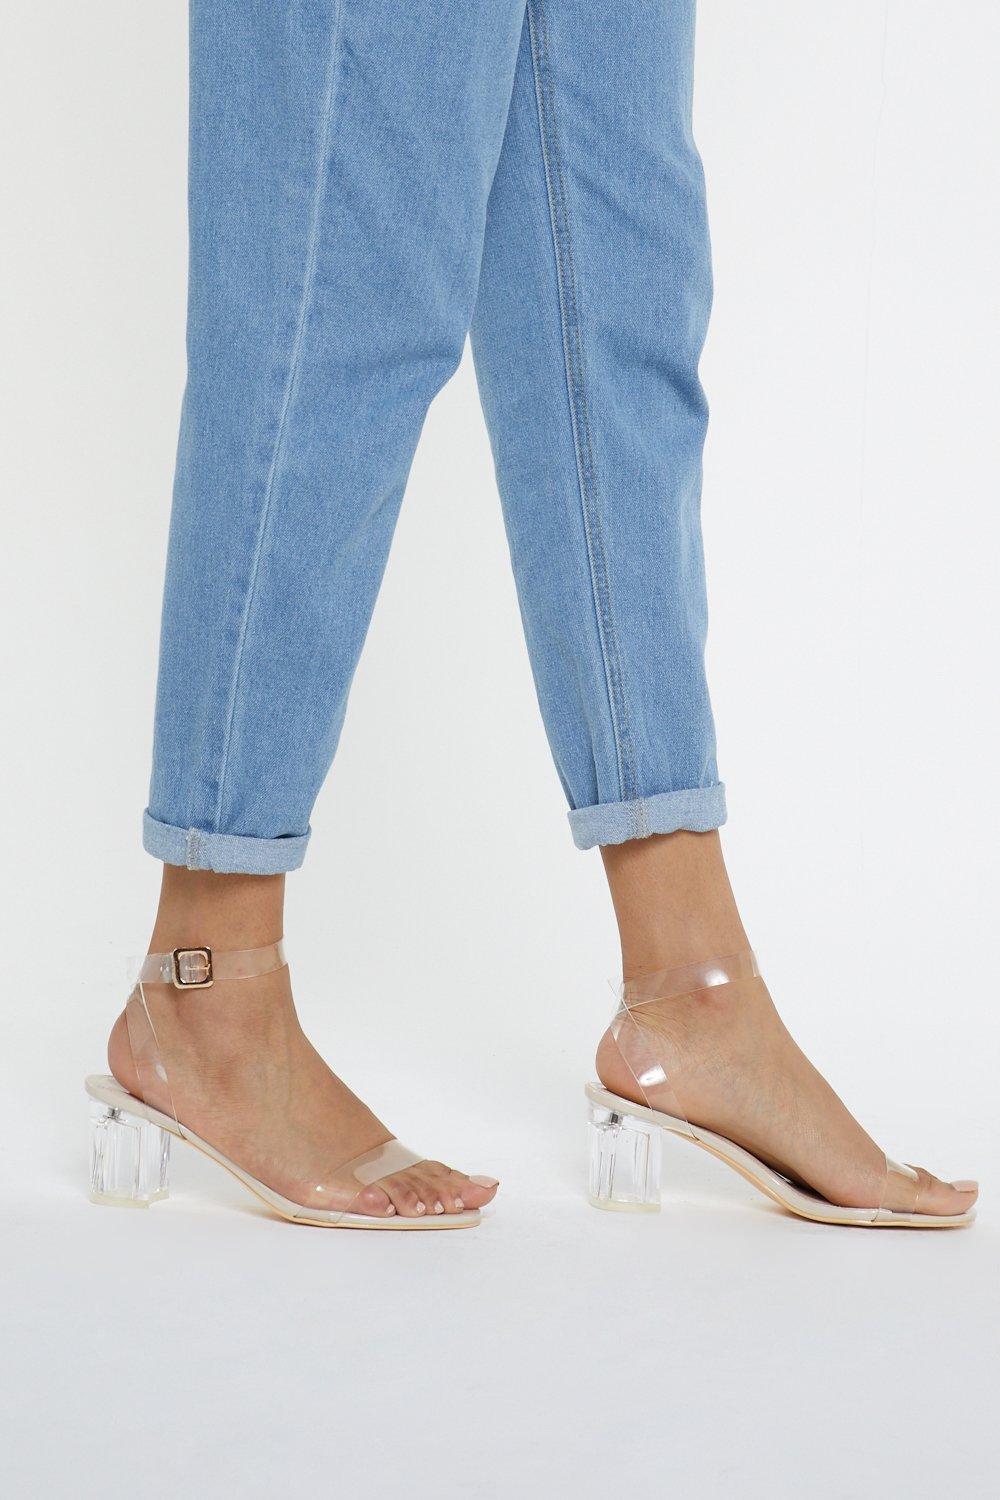 low heel transparent shoes